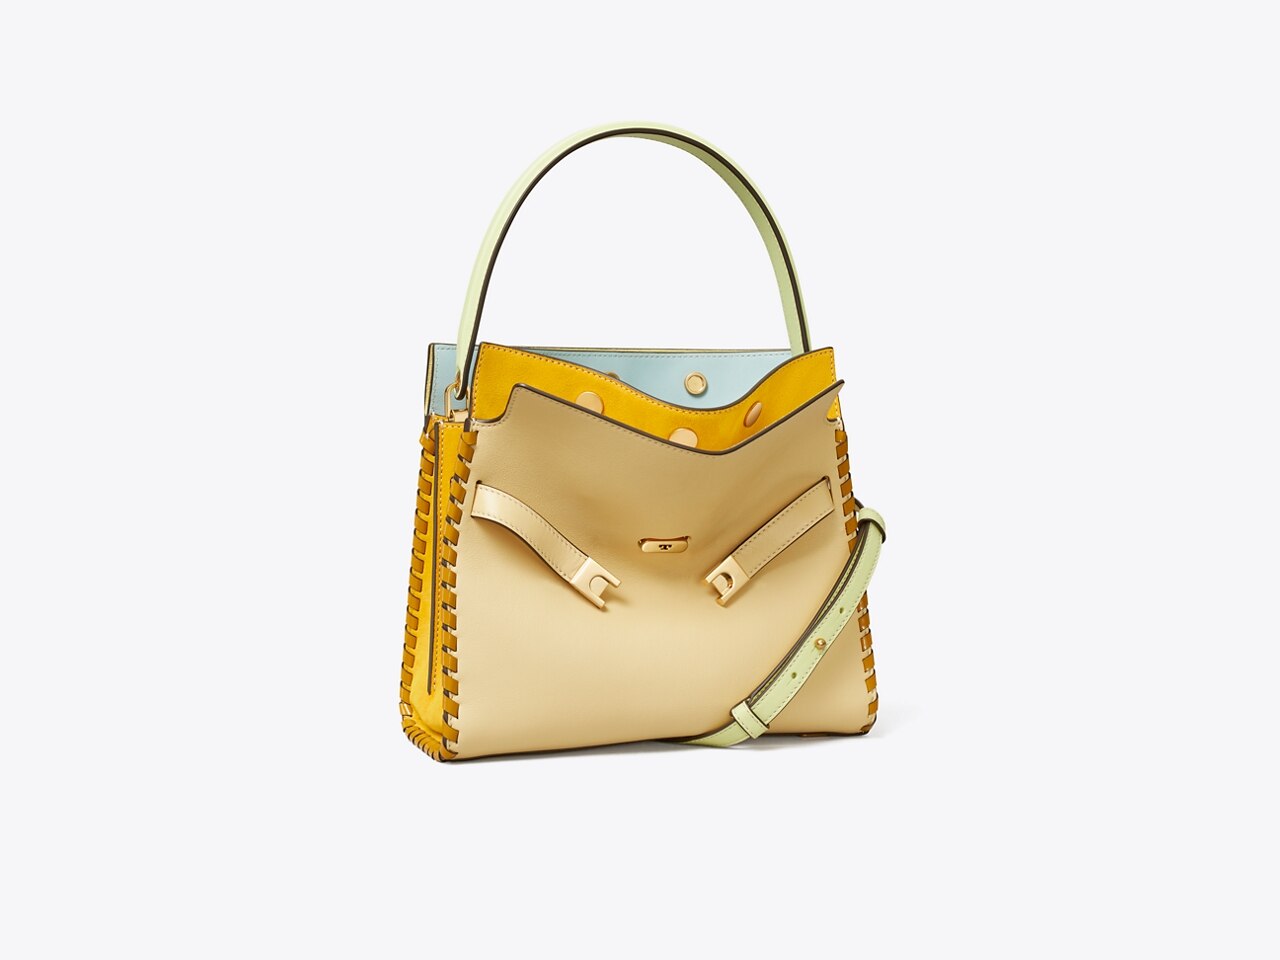 Small Lee Radziwill Double Bag: Women's Handbags, Satchels